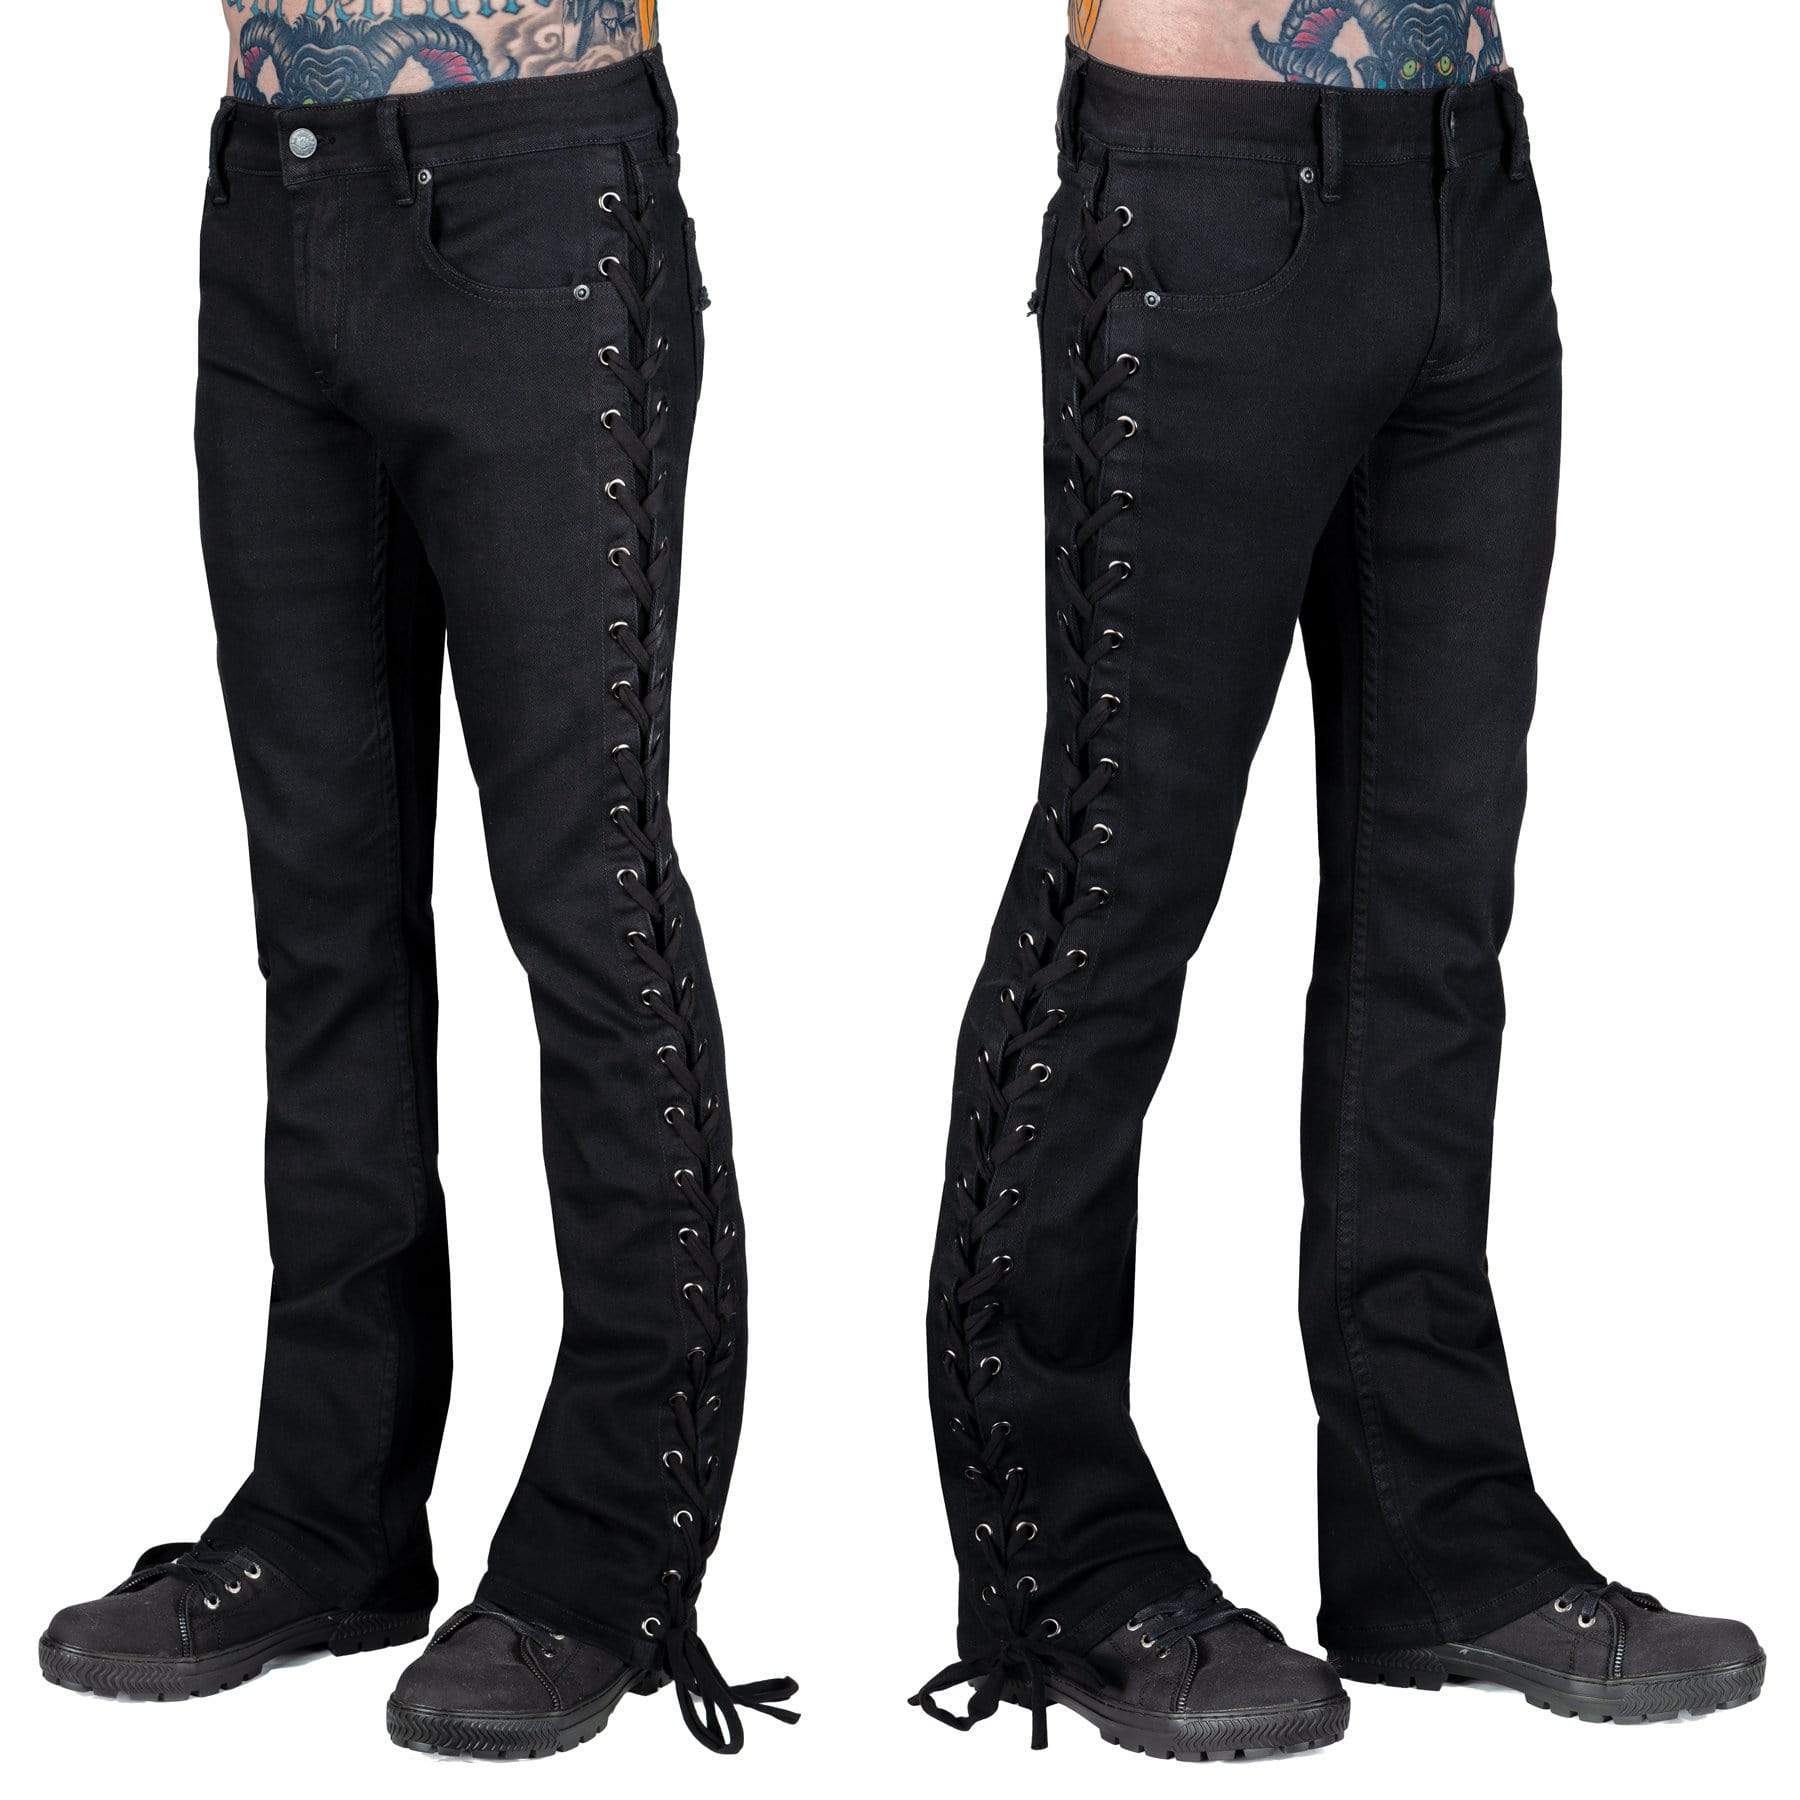 Wornstar Clothing Pants Hellraiser Side Laced Mens Jeans - Black